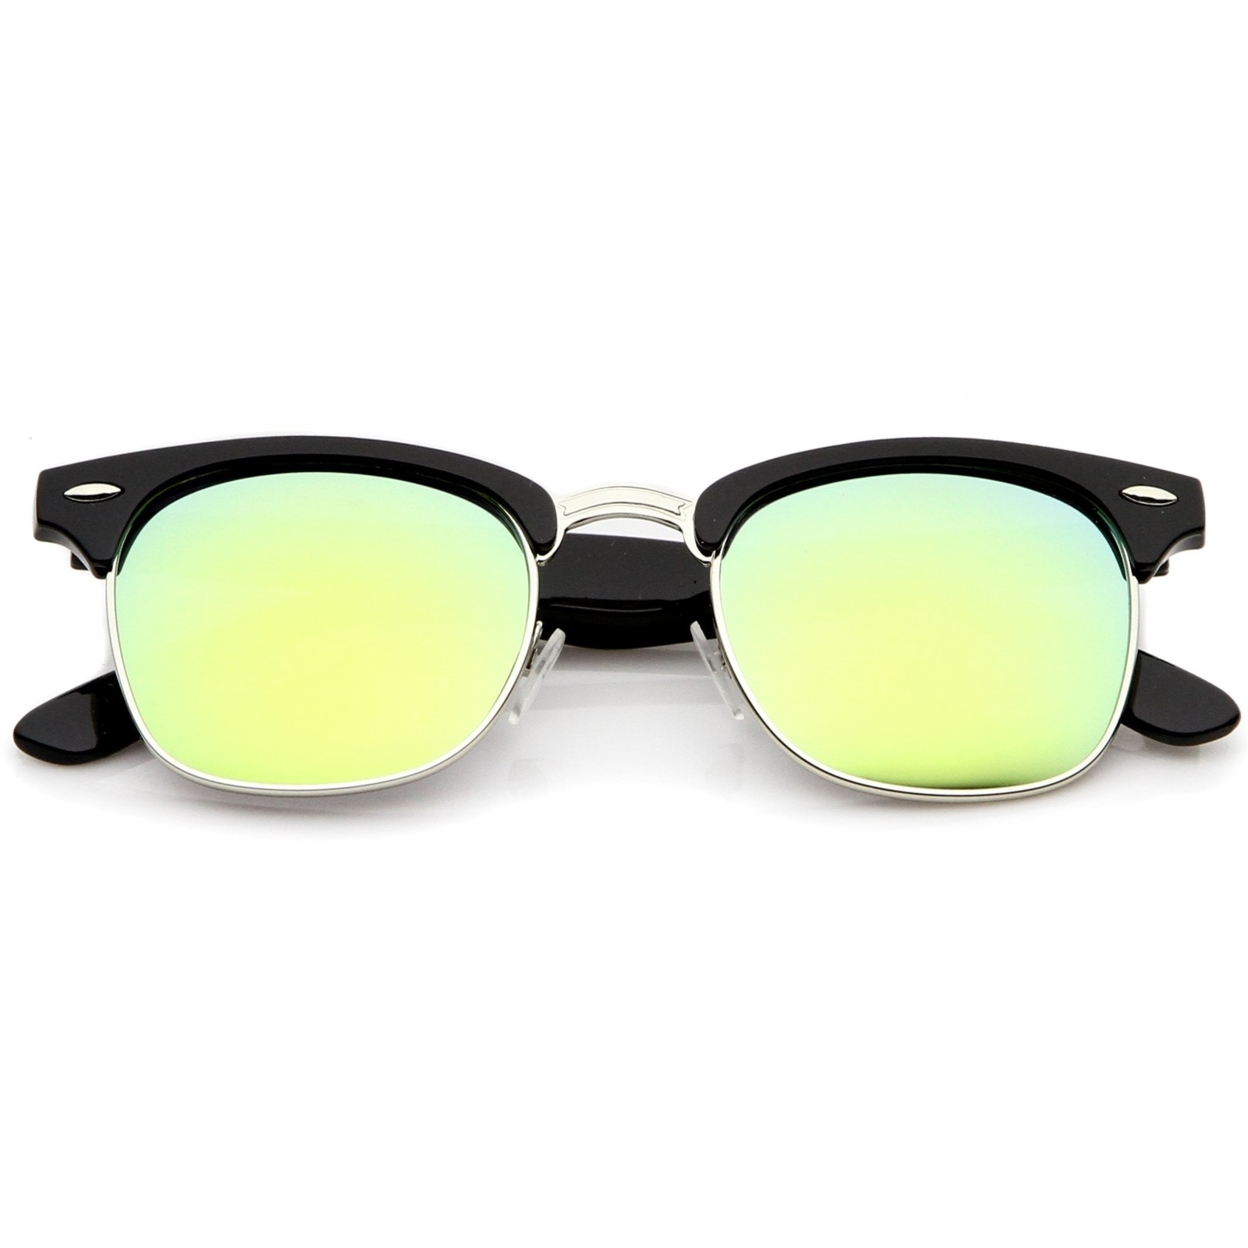 Premium Half Frame Colored Mirror Lens Horn Rimmed Sunglasses 50mm - Black-Gold / Blue Mirror